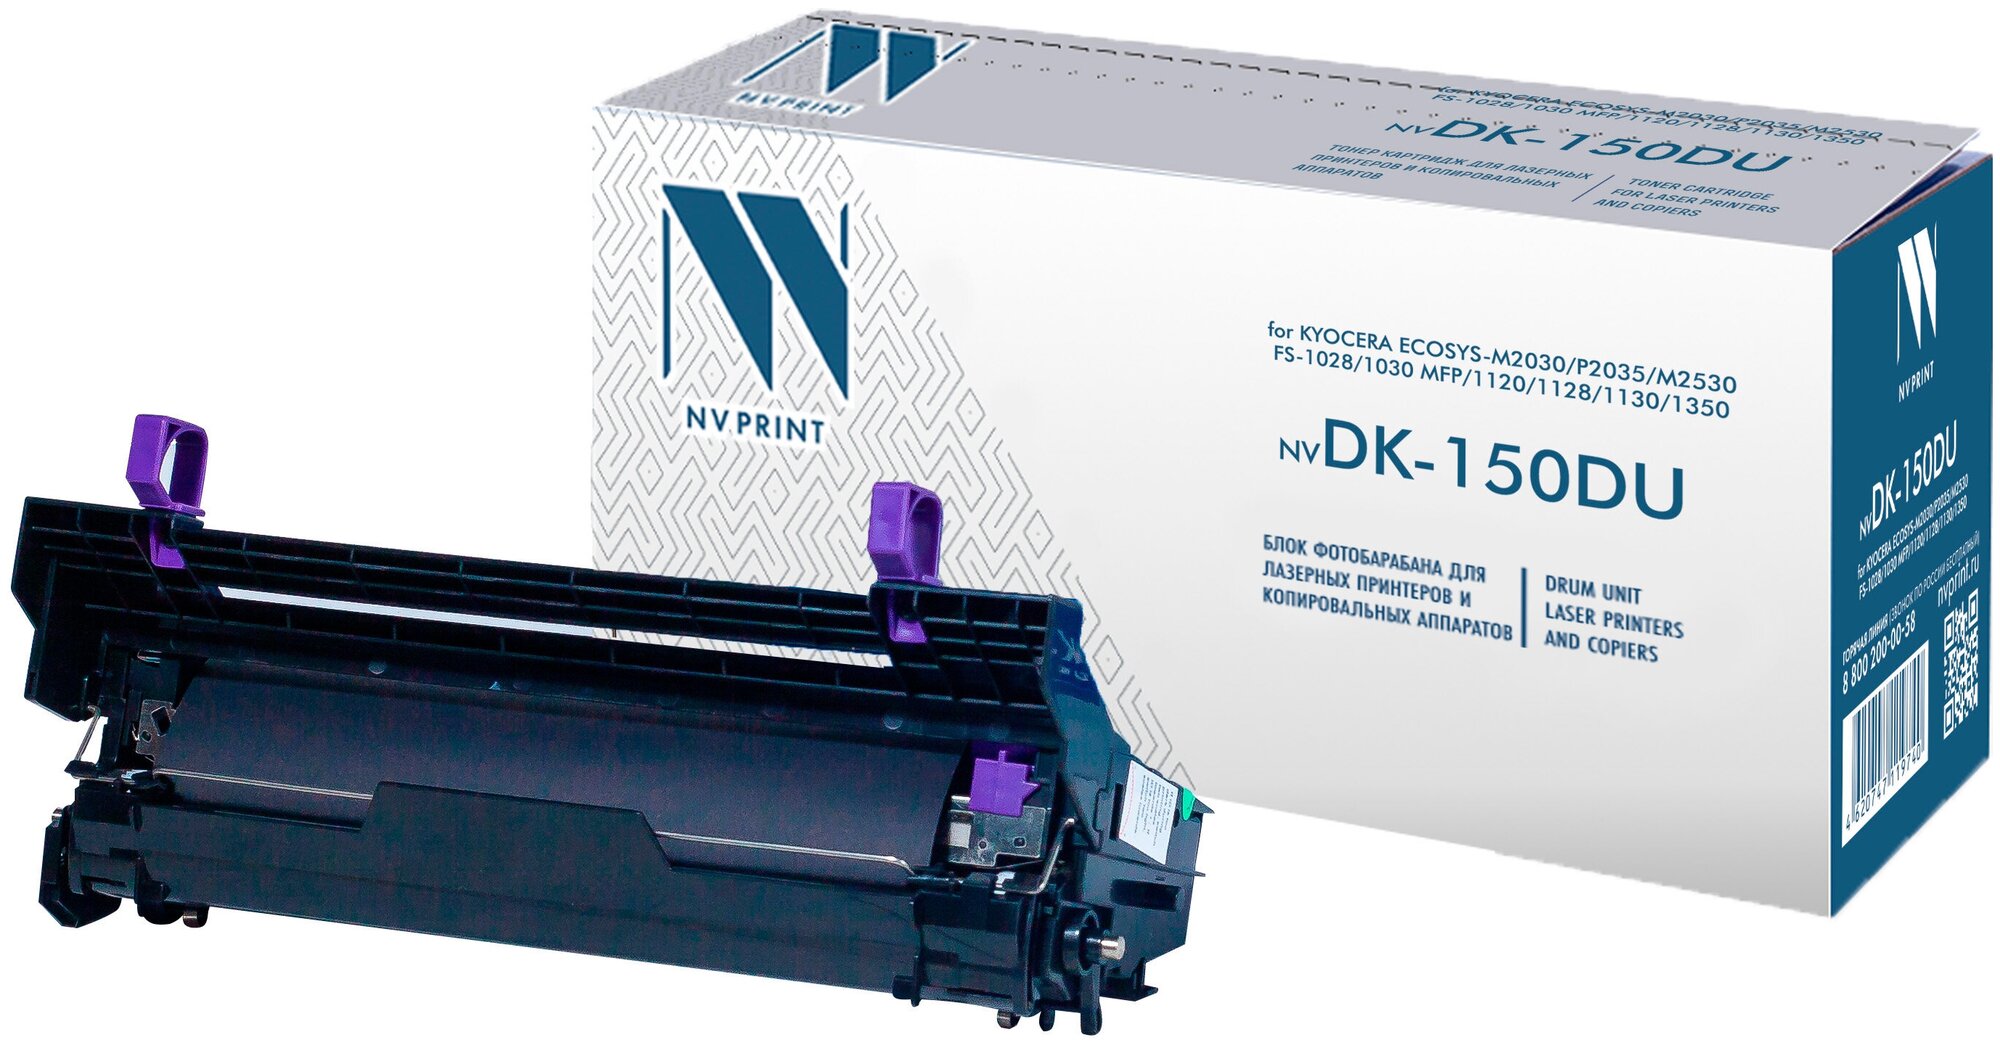 Драм картридж DK-150 для принтера Куасера, Kyocera FS-1028MFP; FS-1028MFP/DP; FS-1030MFP; FS-1030MFP/DP